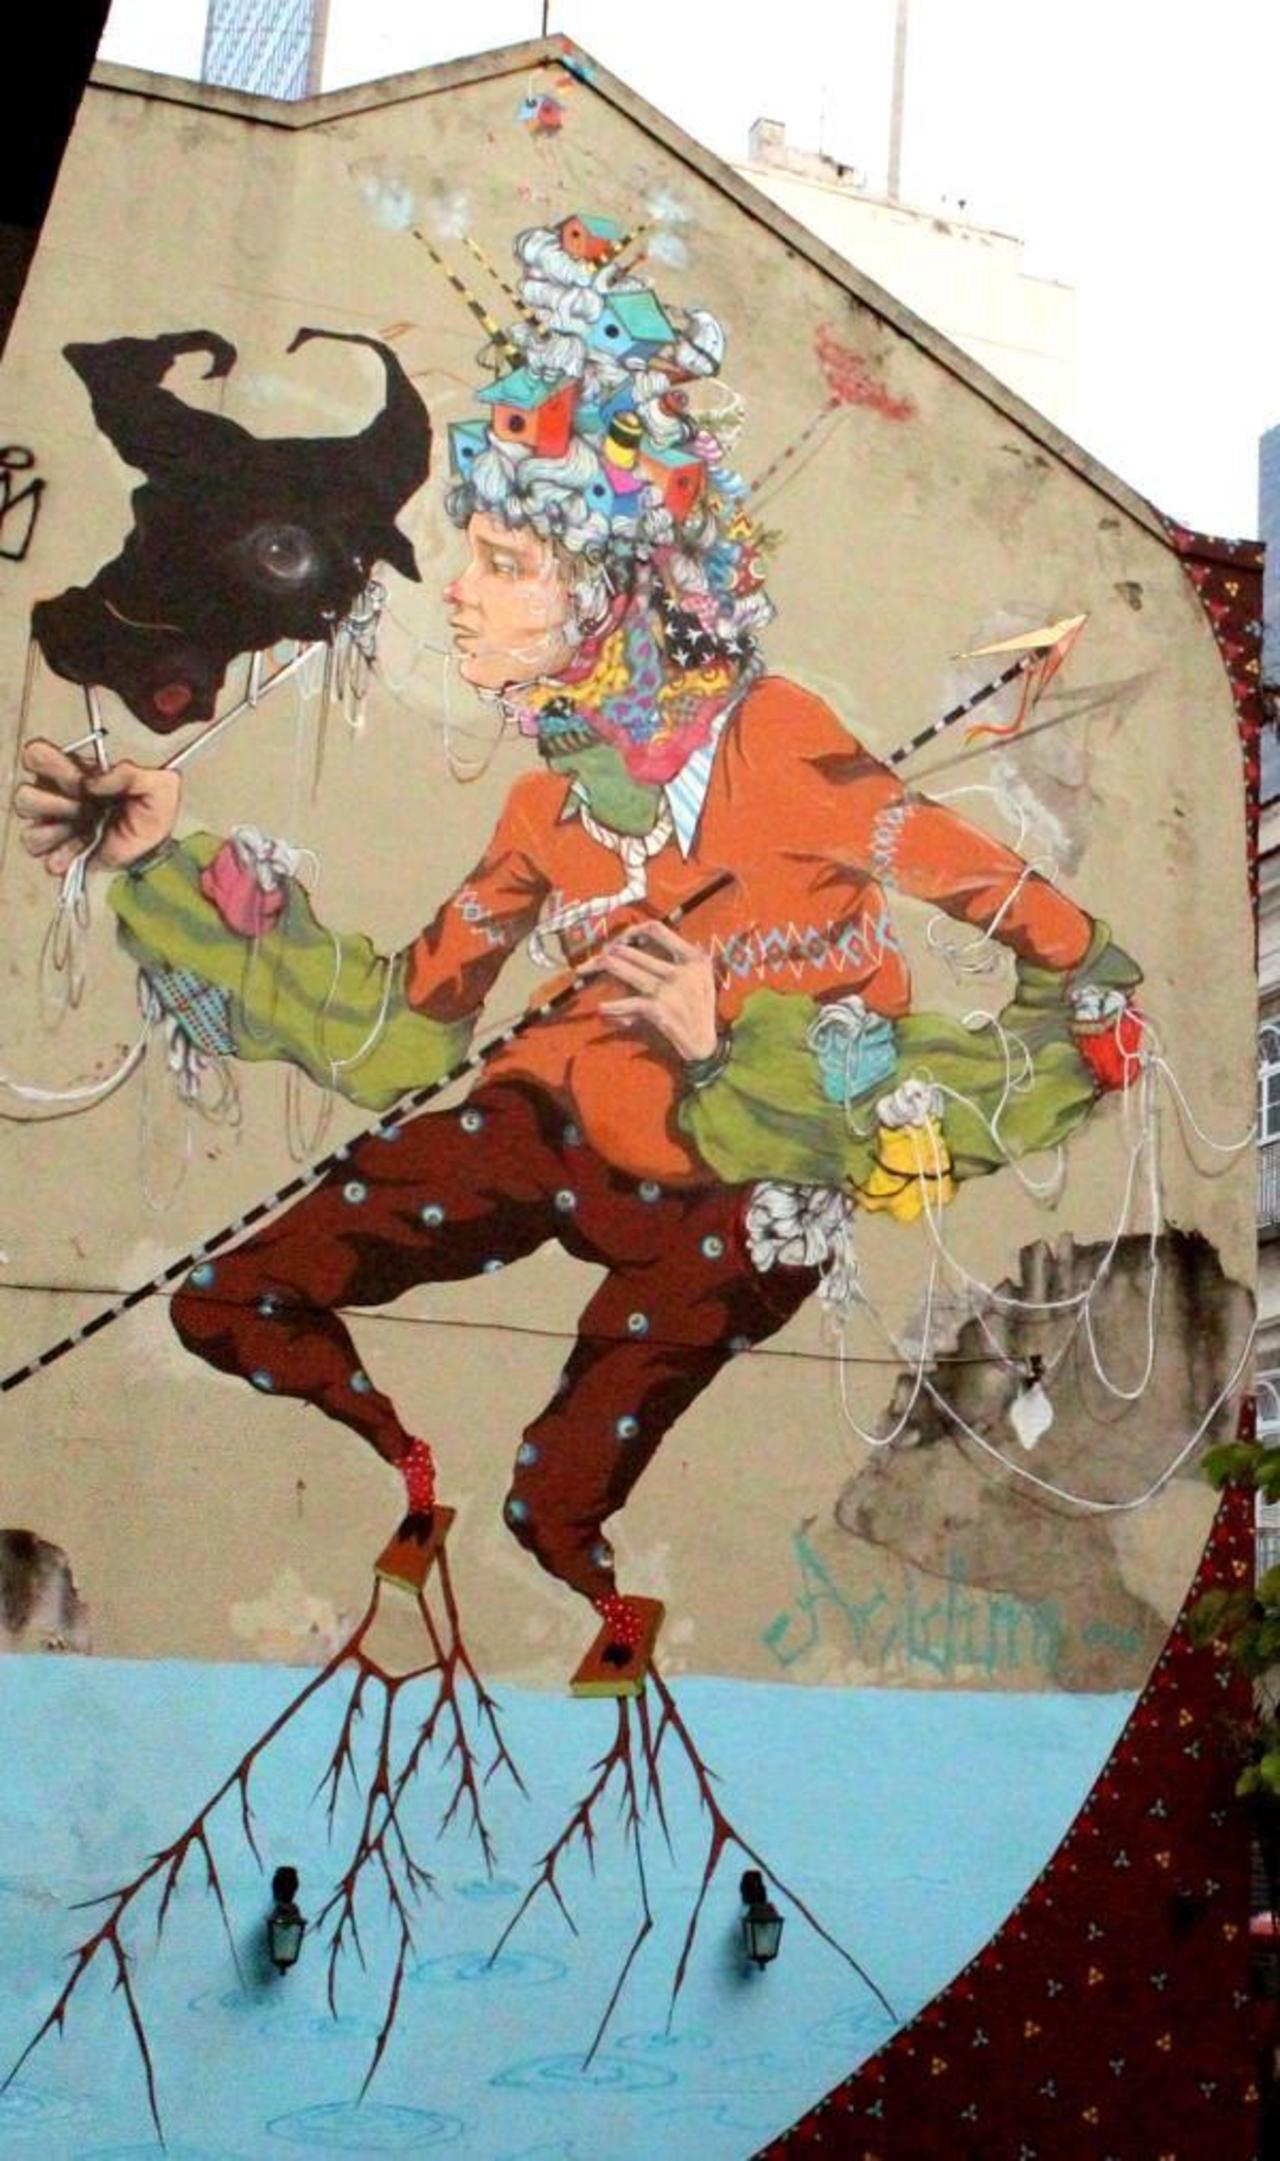 Latin American street artists - Grupo Acidum
#streetart #art #graffiti #mural http://t.co/xl7mtOE5Hc